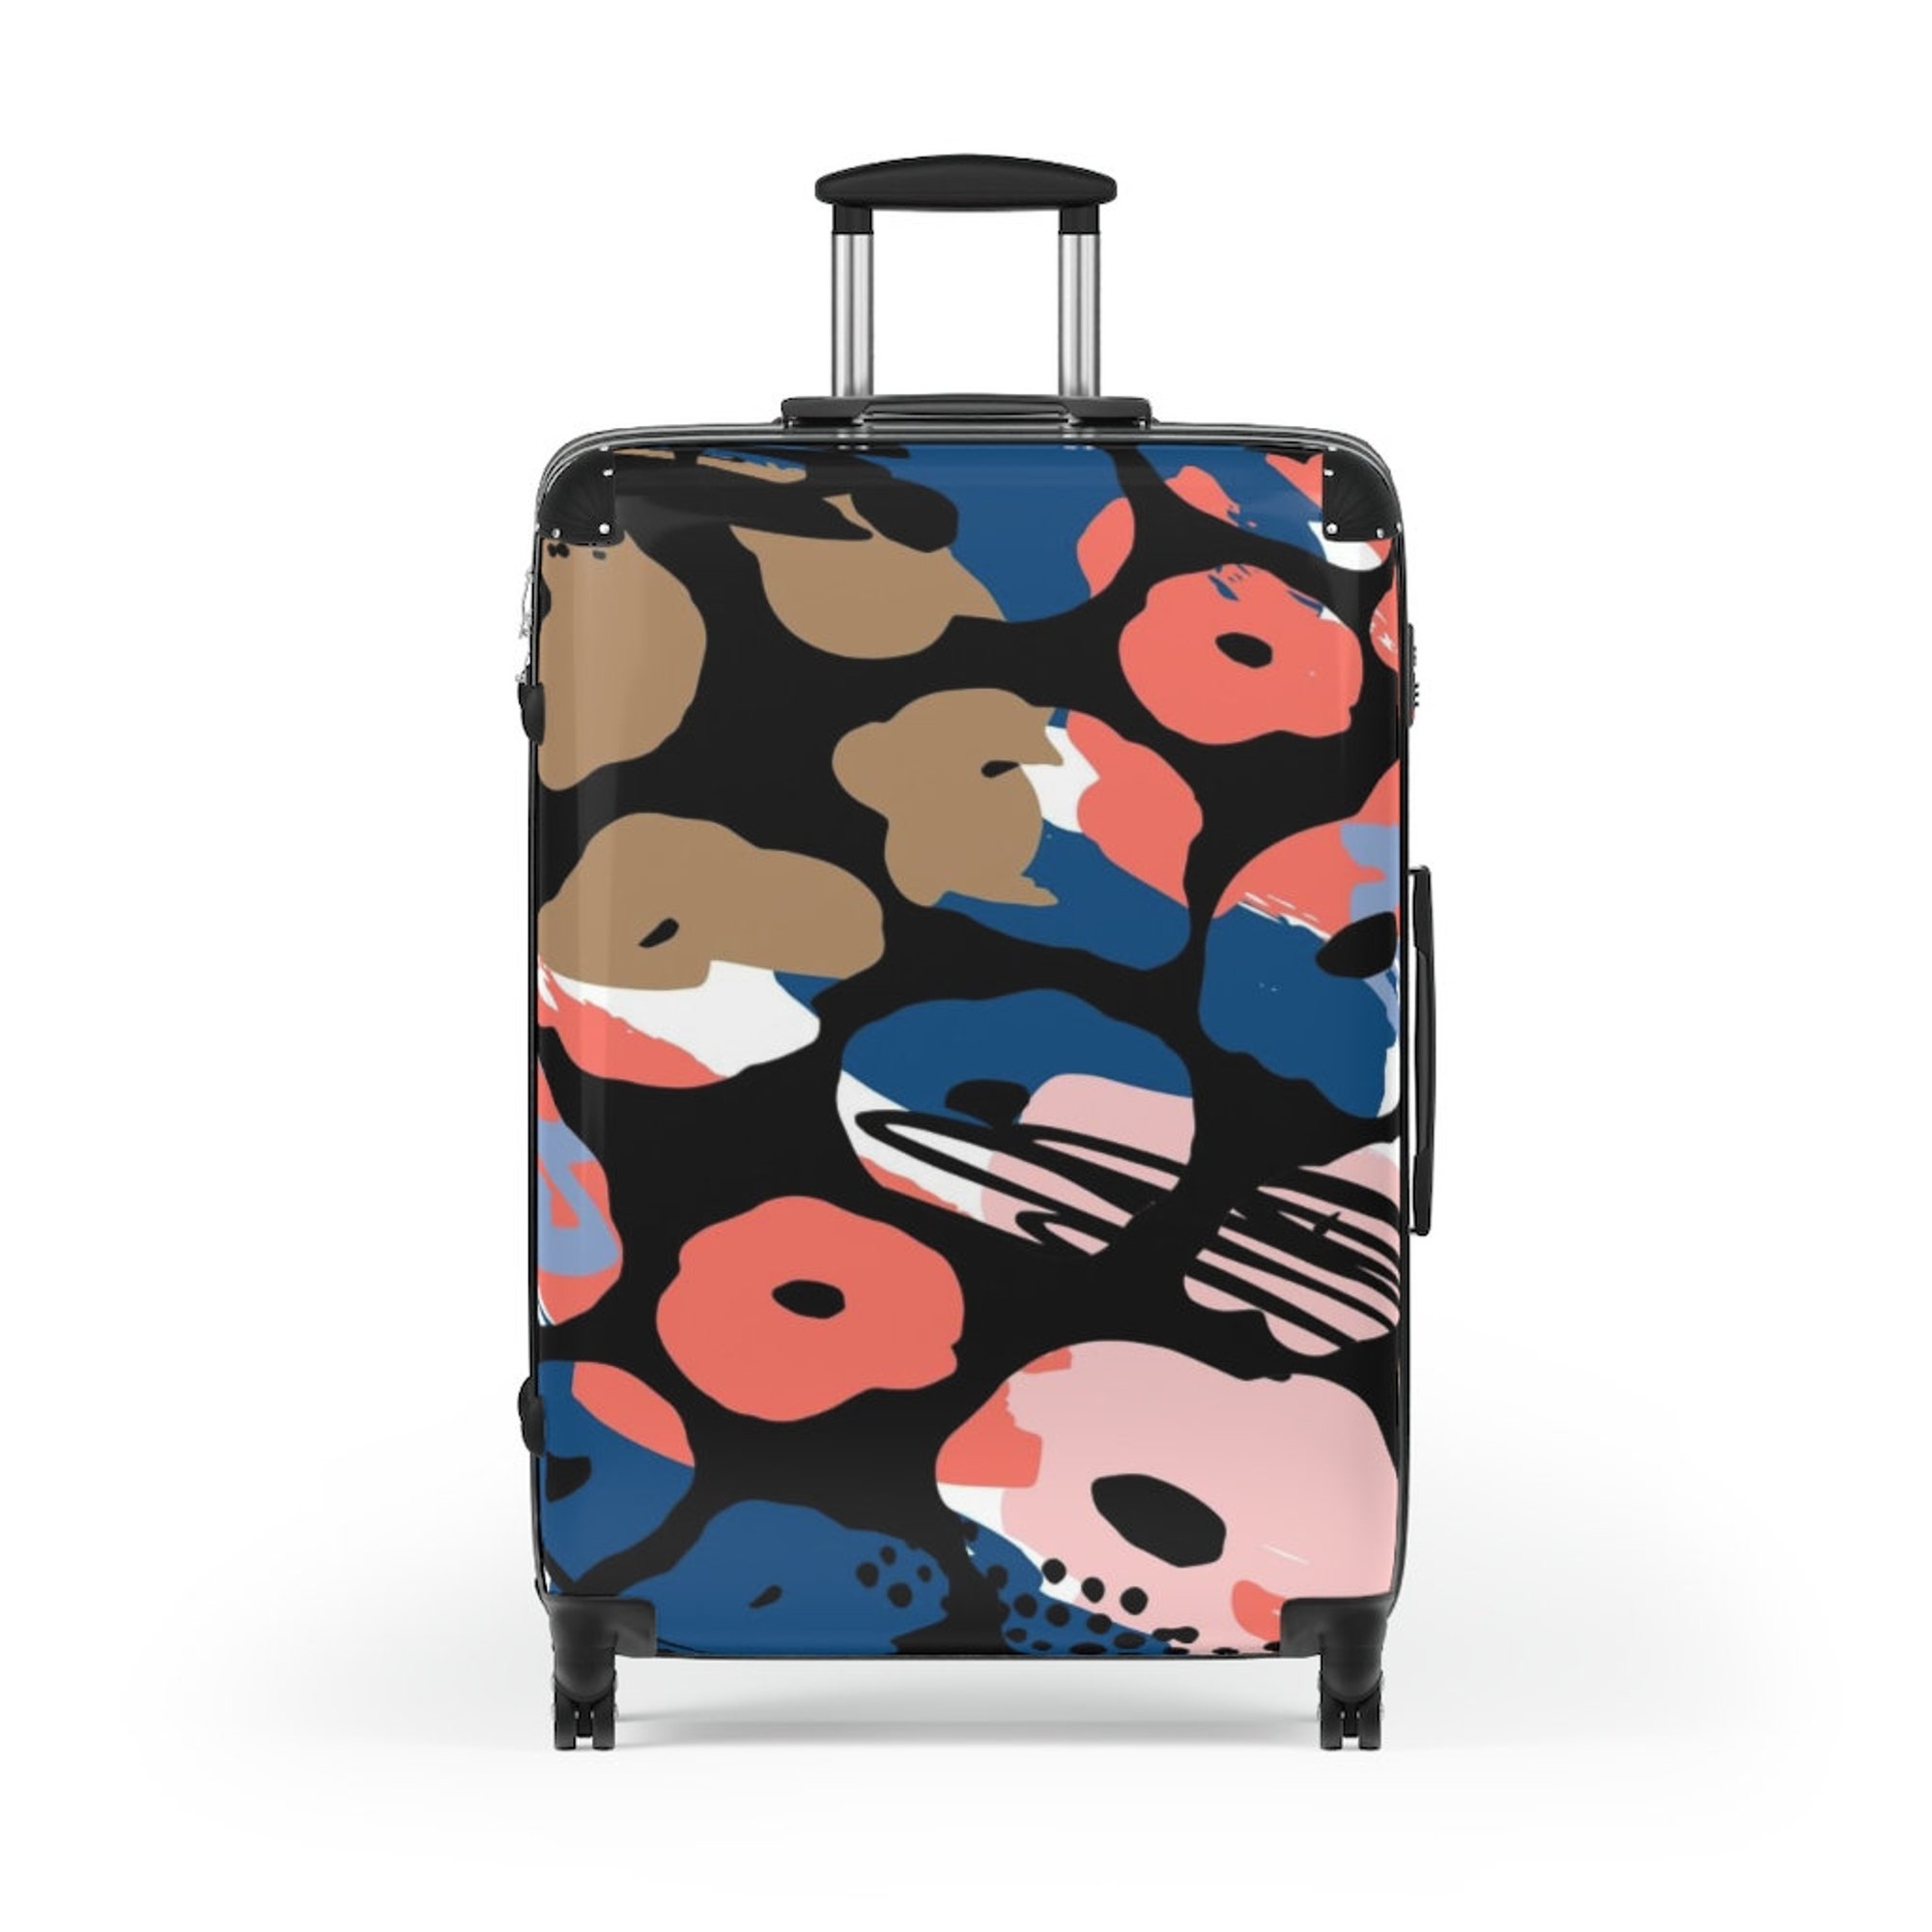 The Cora Suitcase